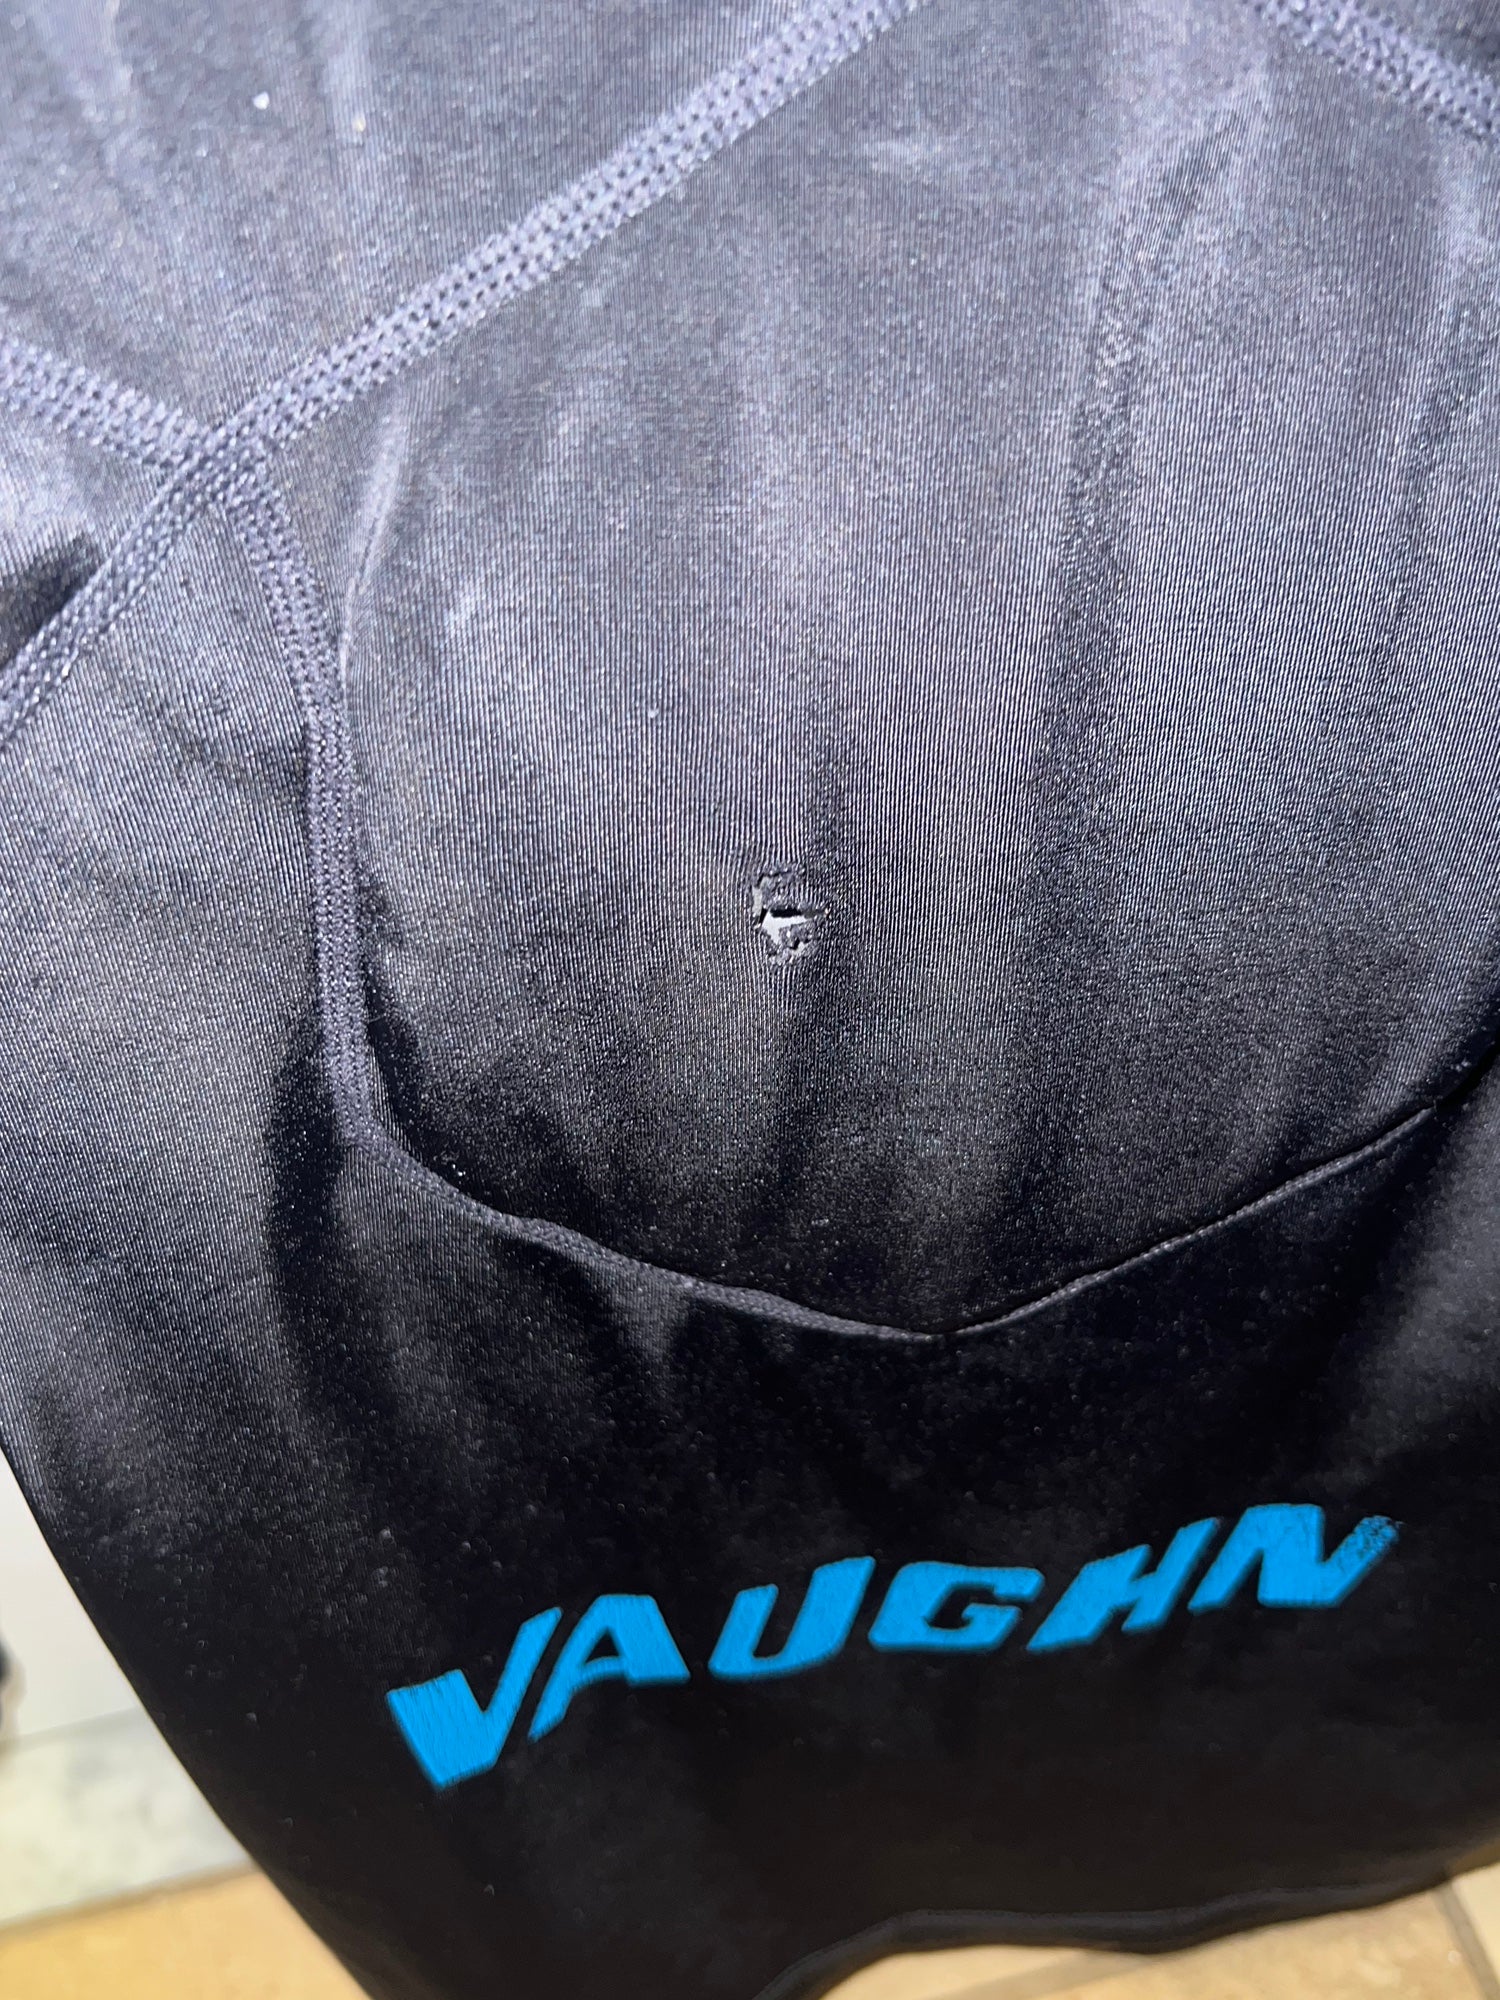 XL Vaughn Padded Shirt Ice Hockey Goalie *Like New*